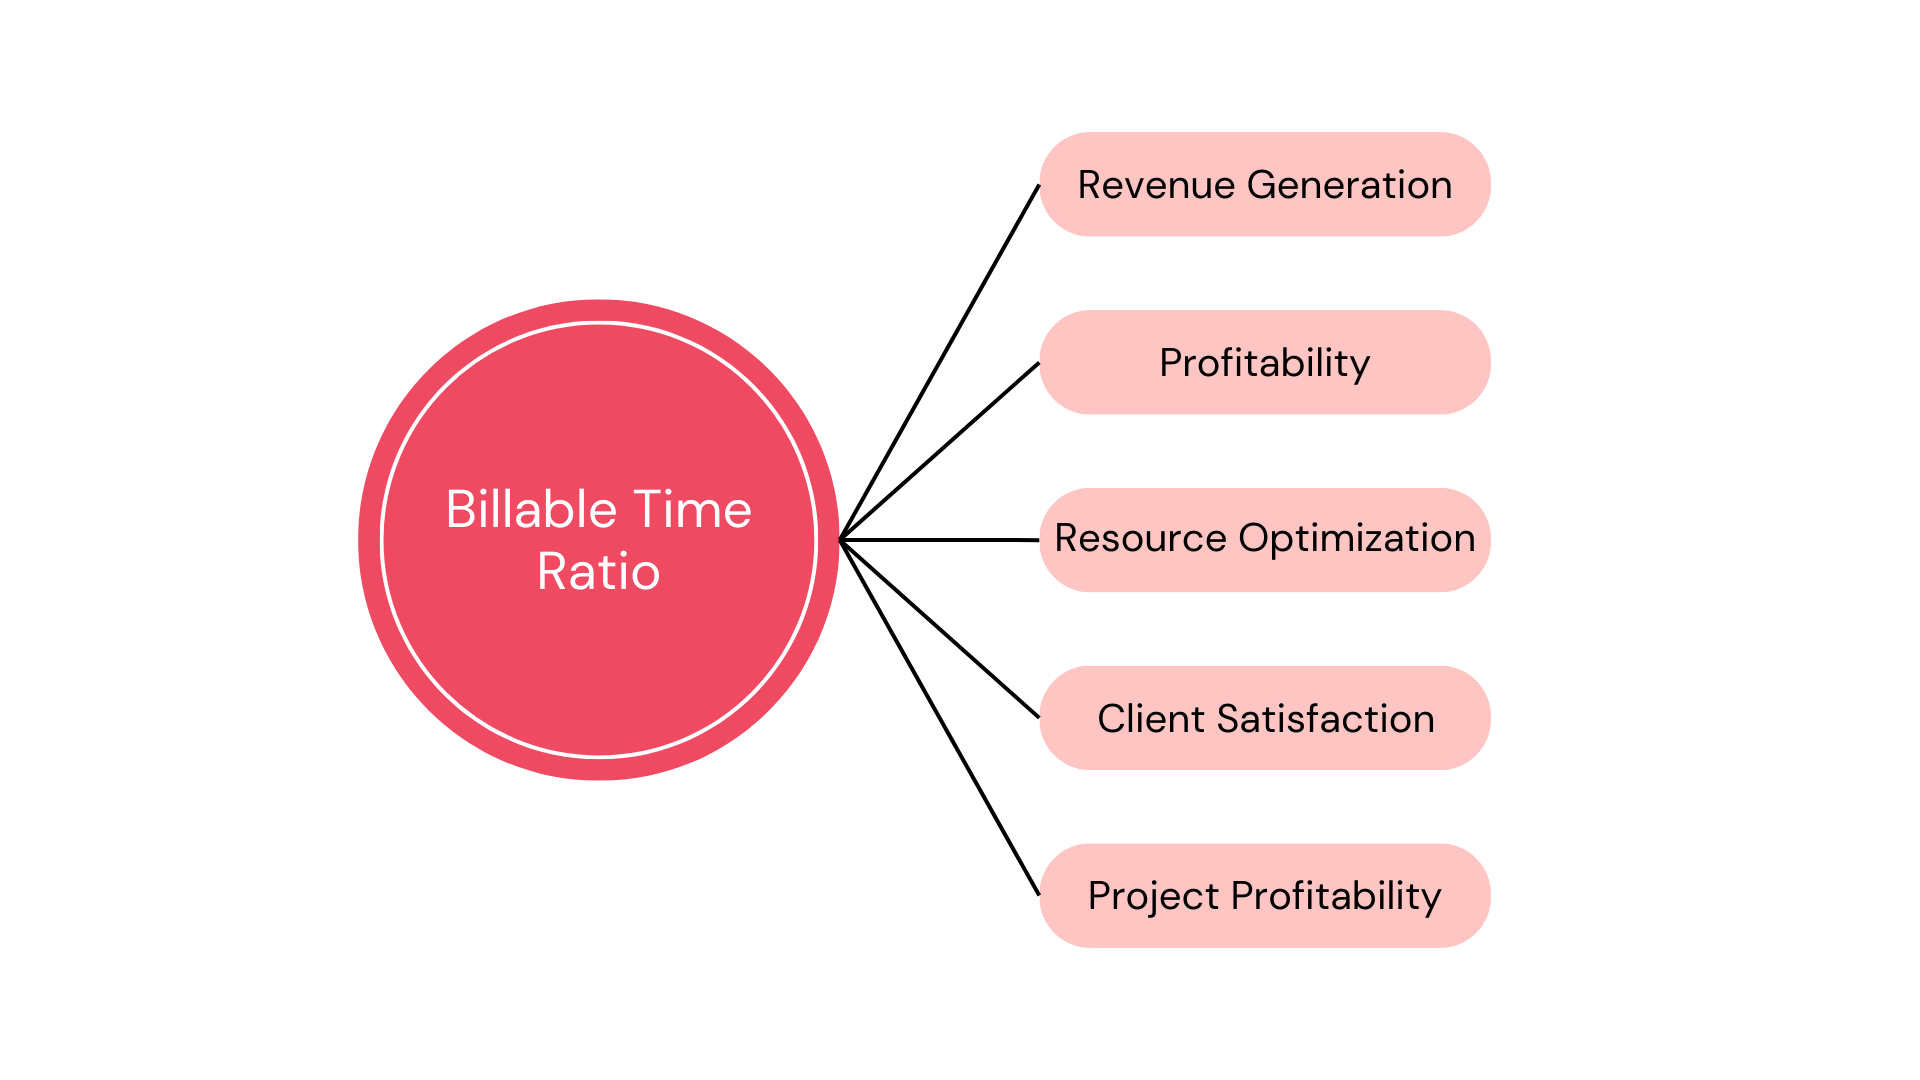 Billable time ratio